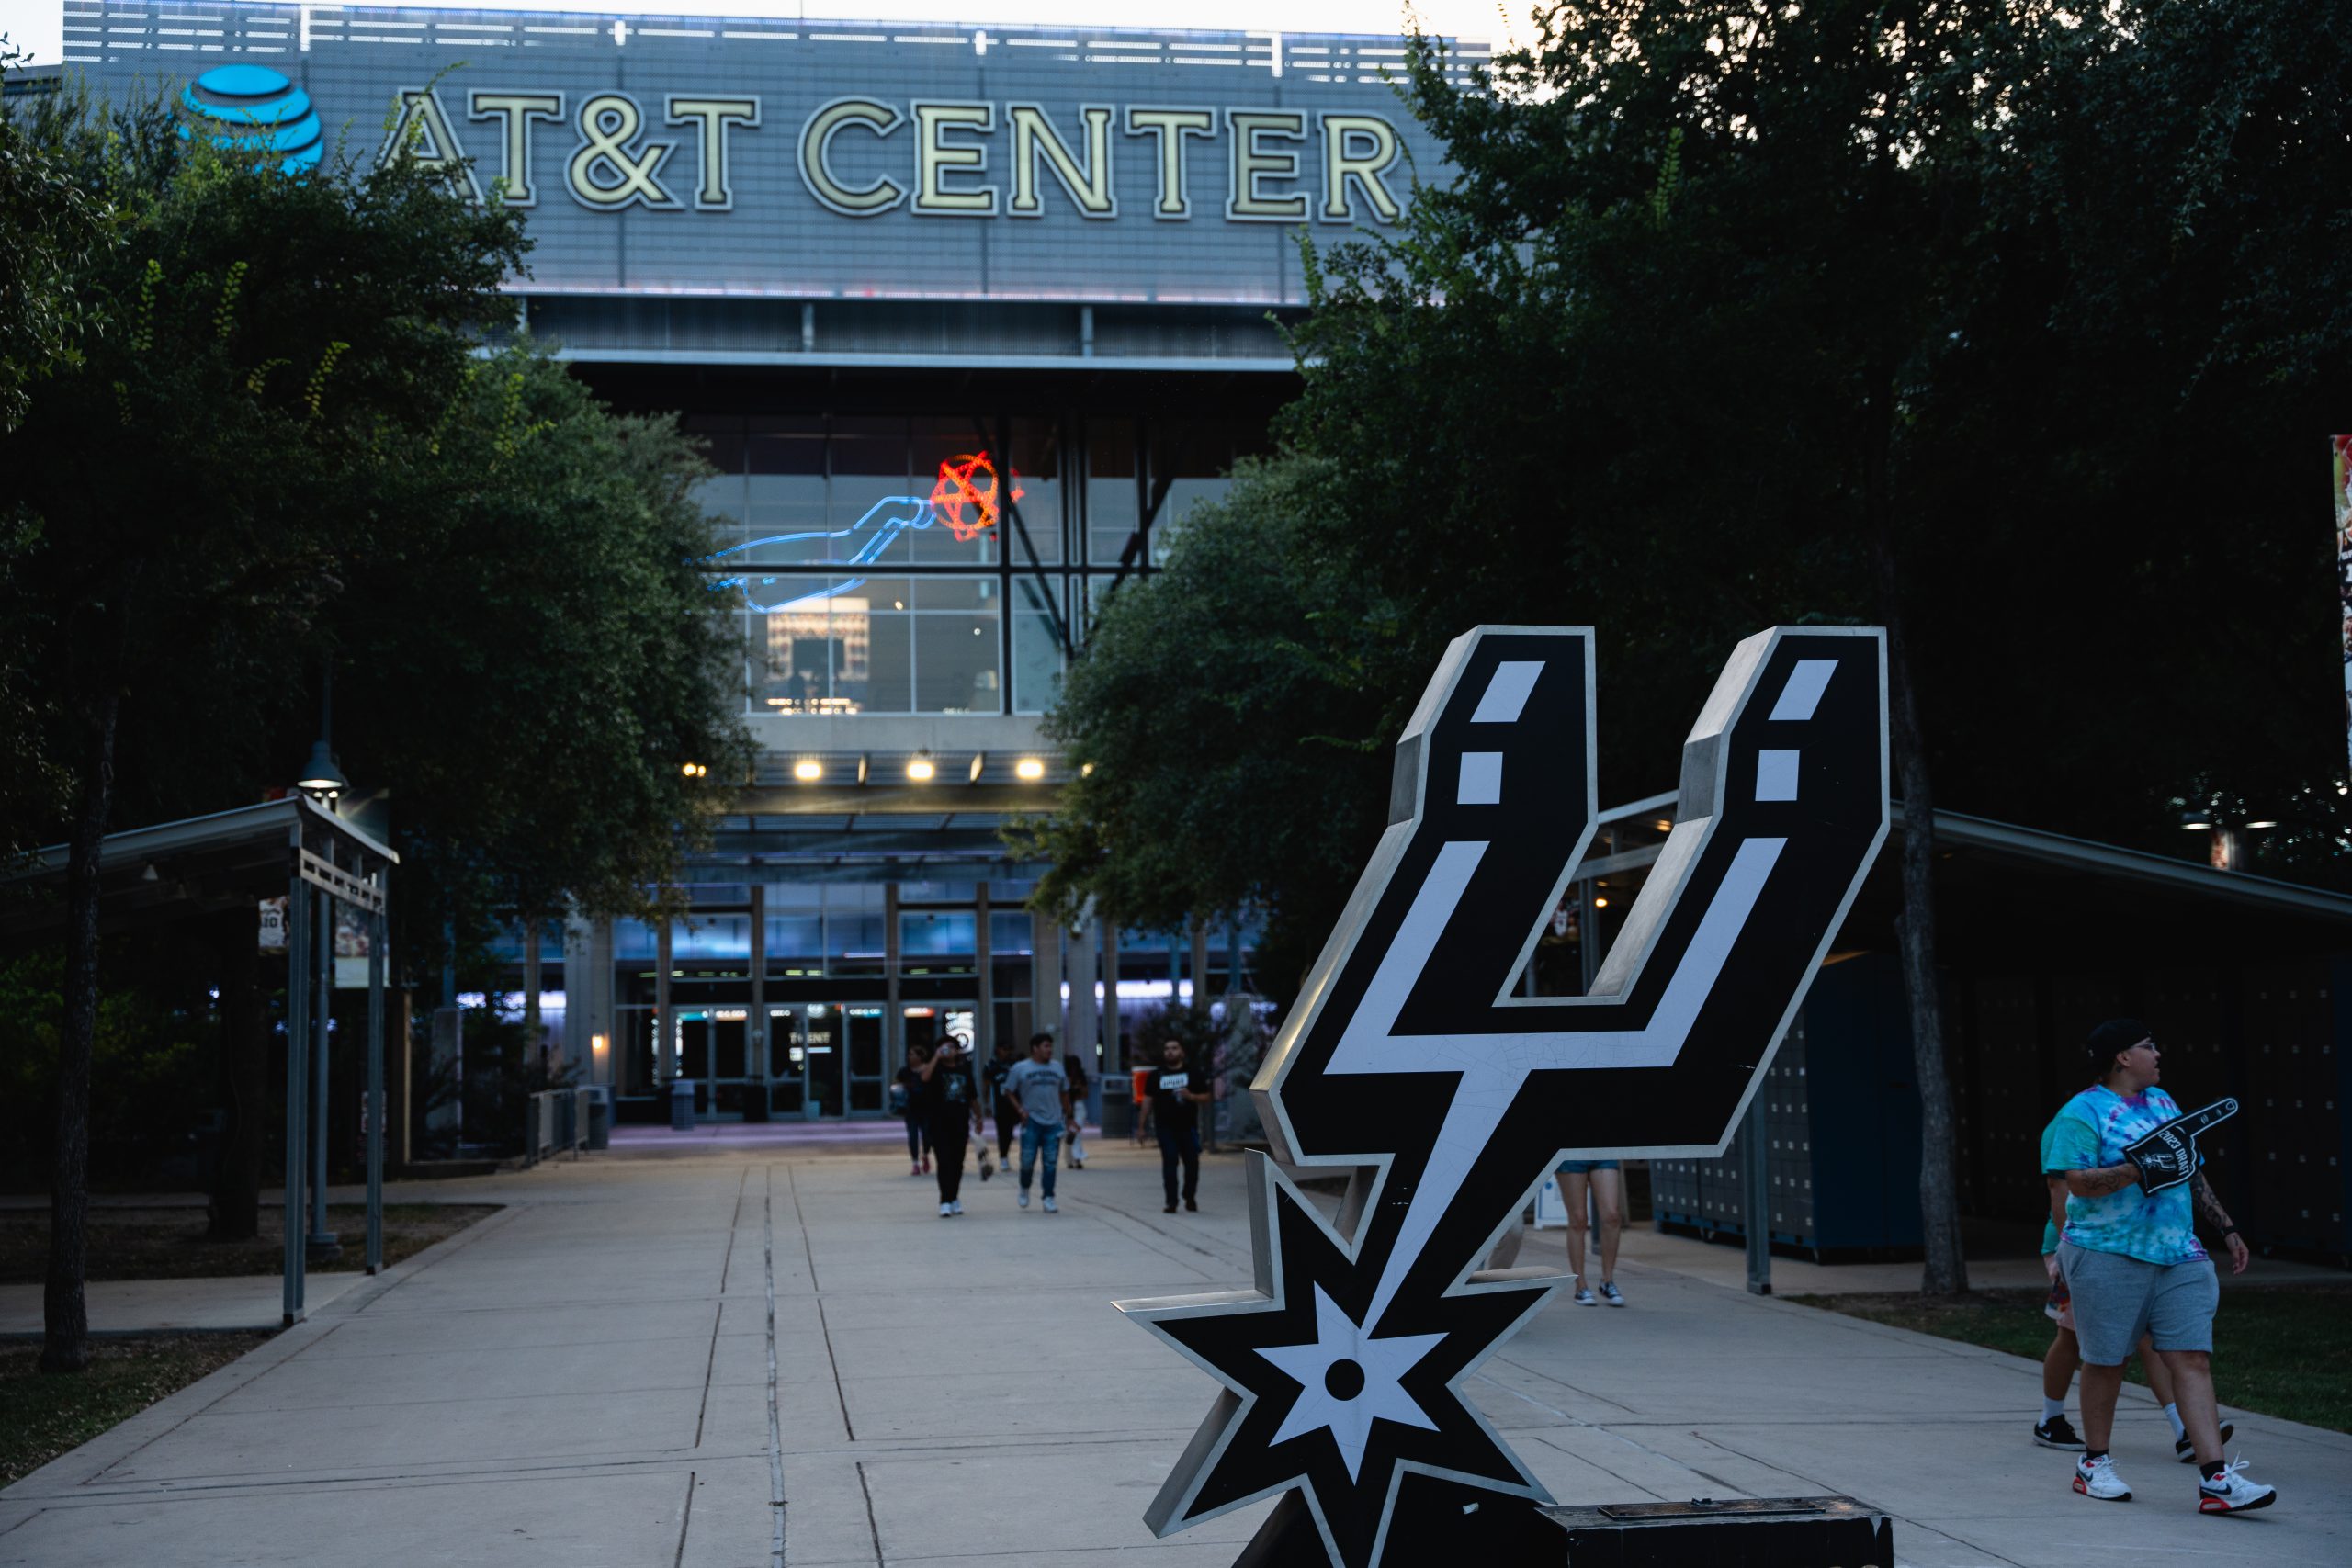 San Antonio Spurs added a new photo. - San Antonio Spurs